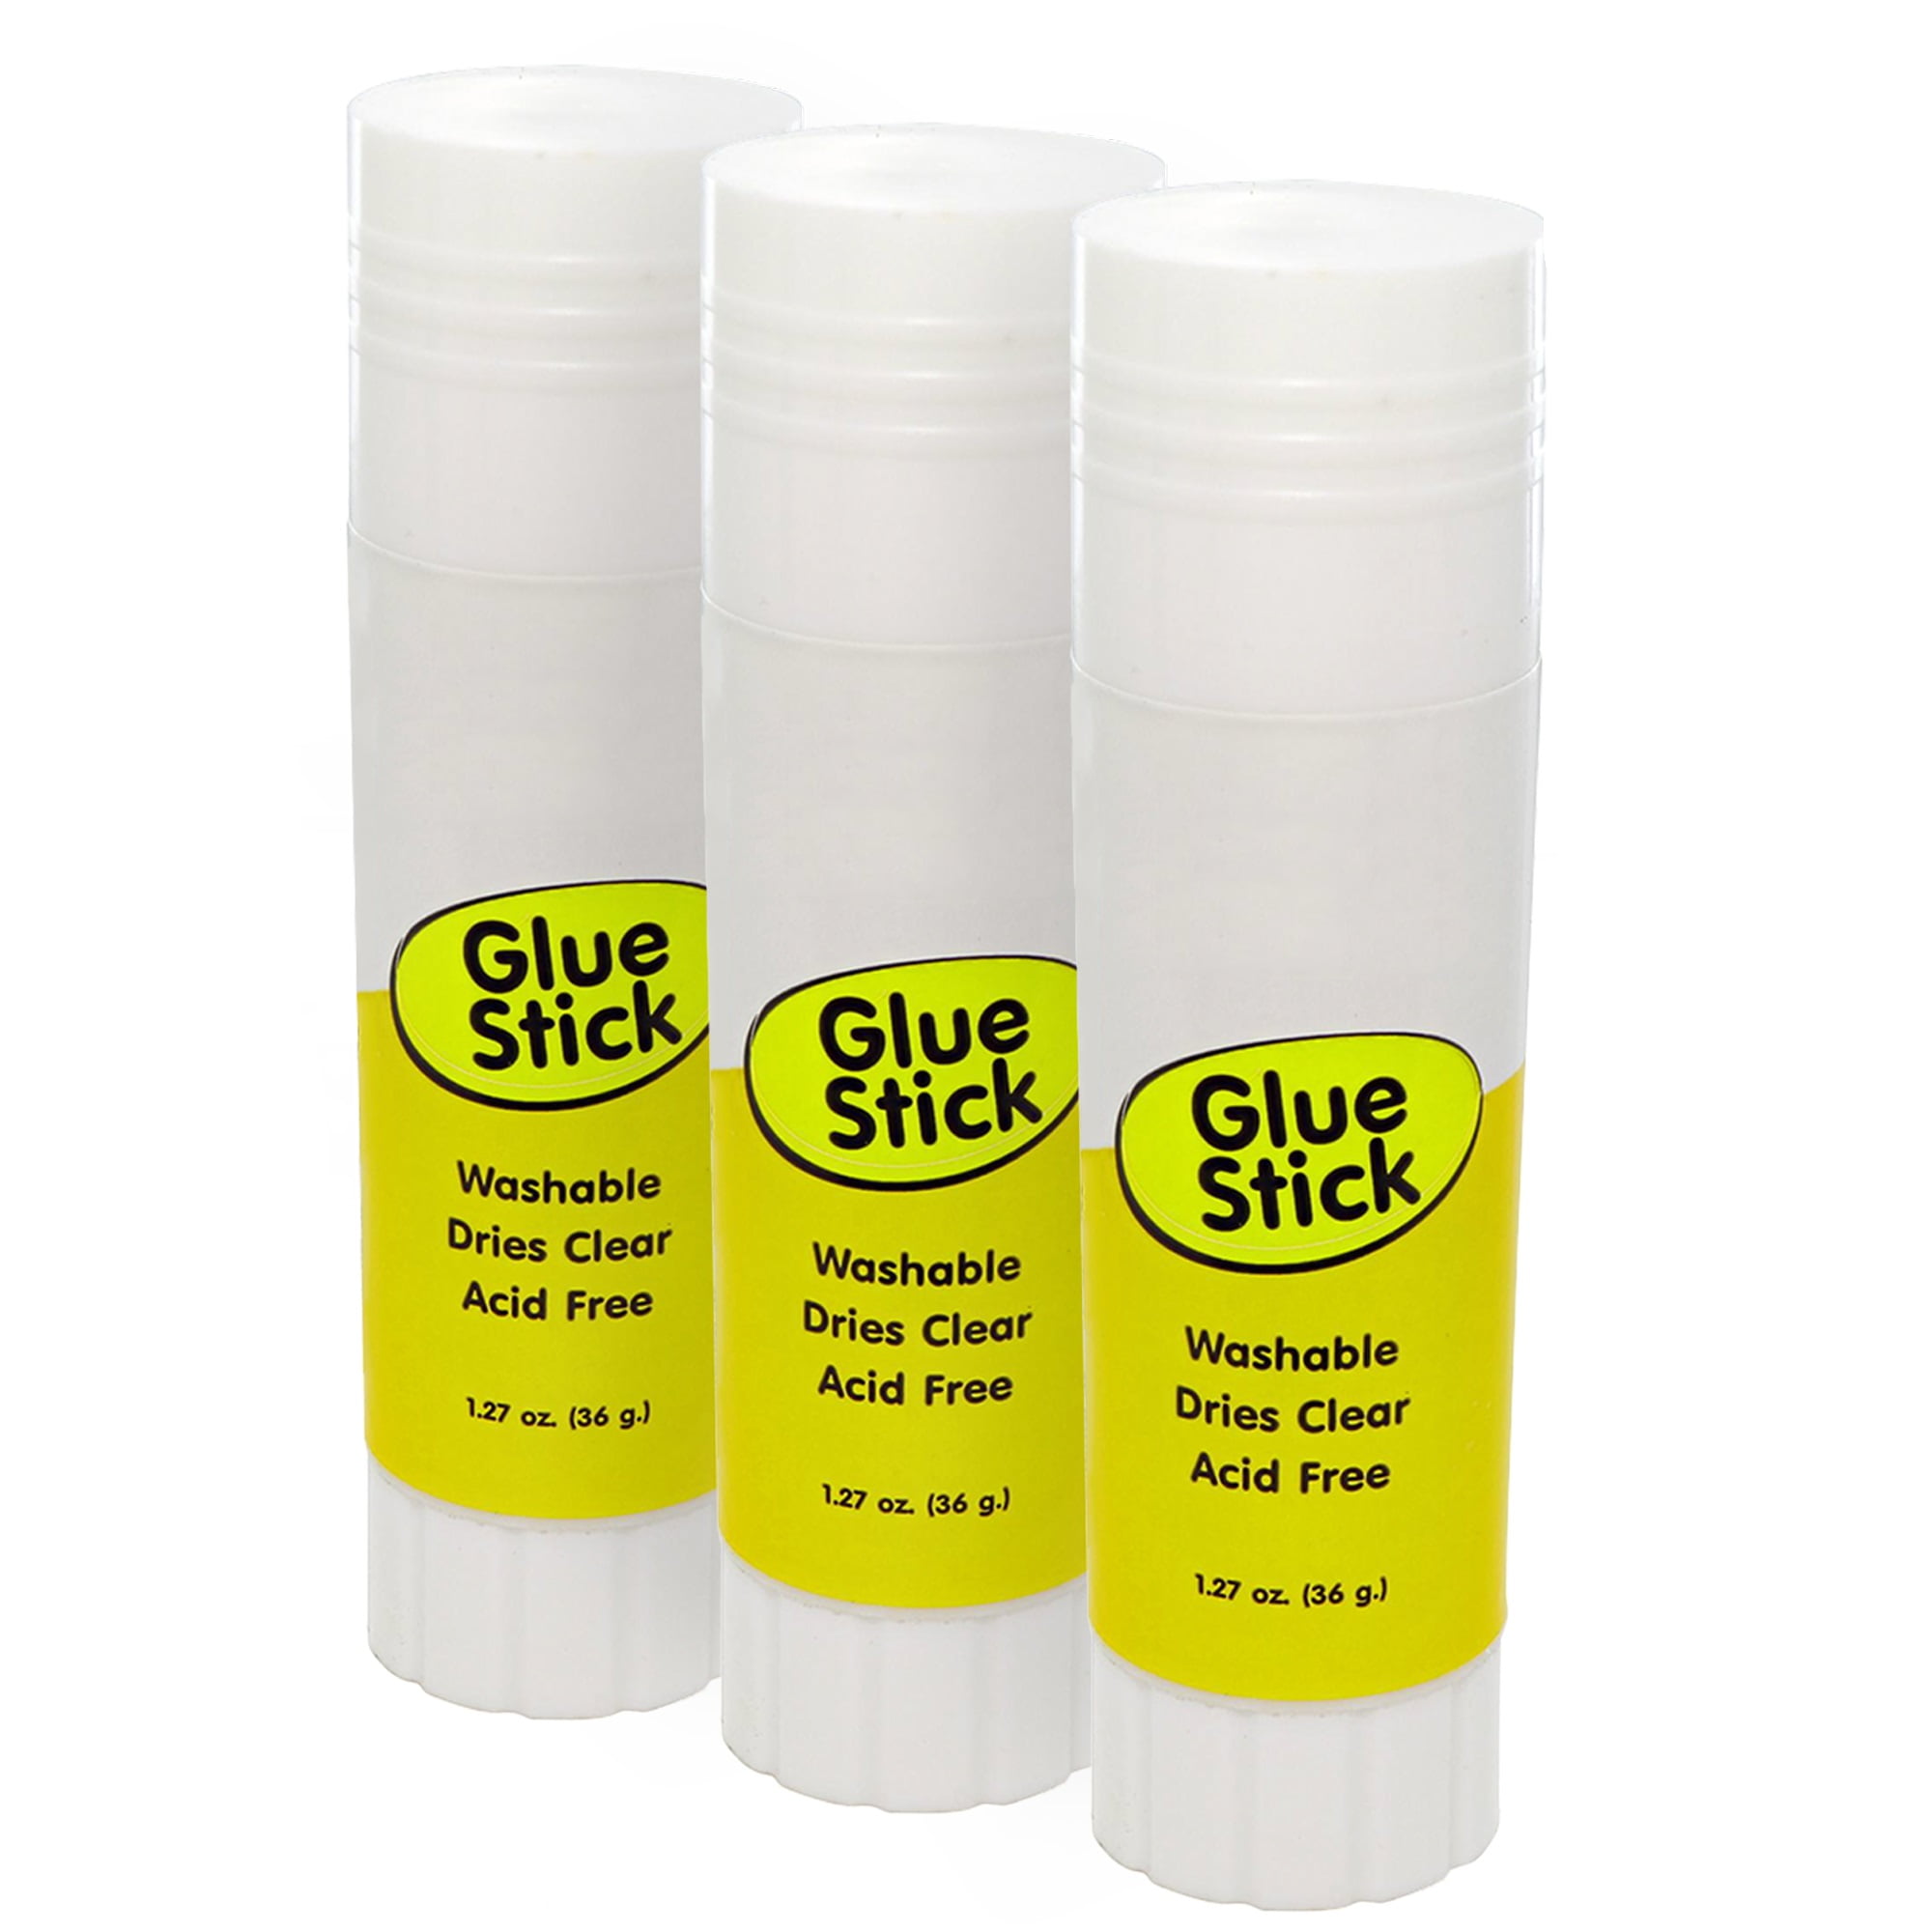 Jumbo Glue Stick, .77-oz.